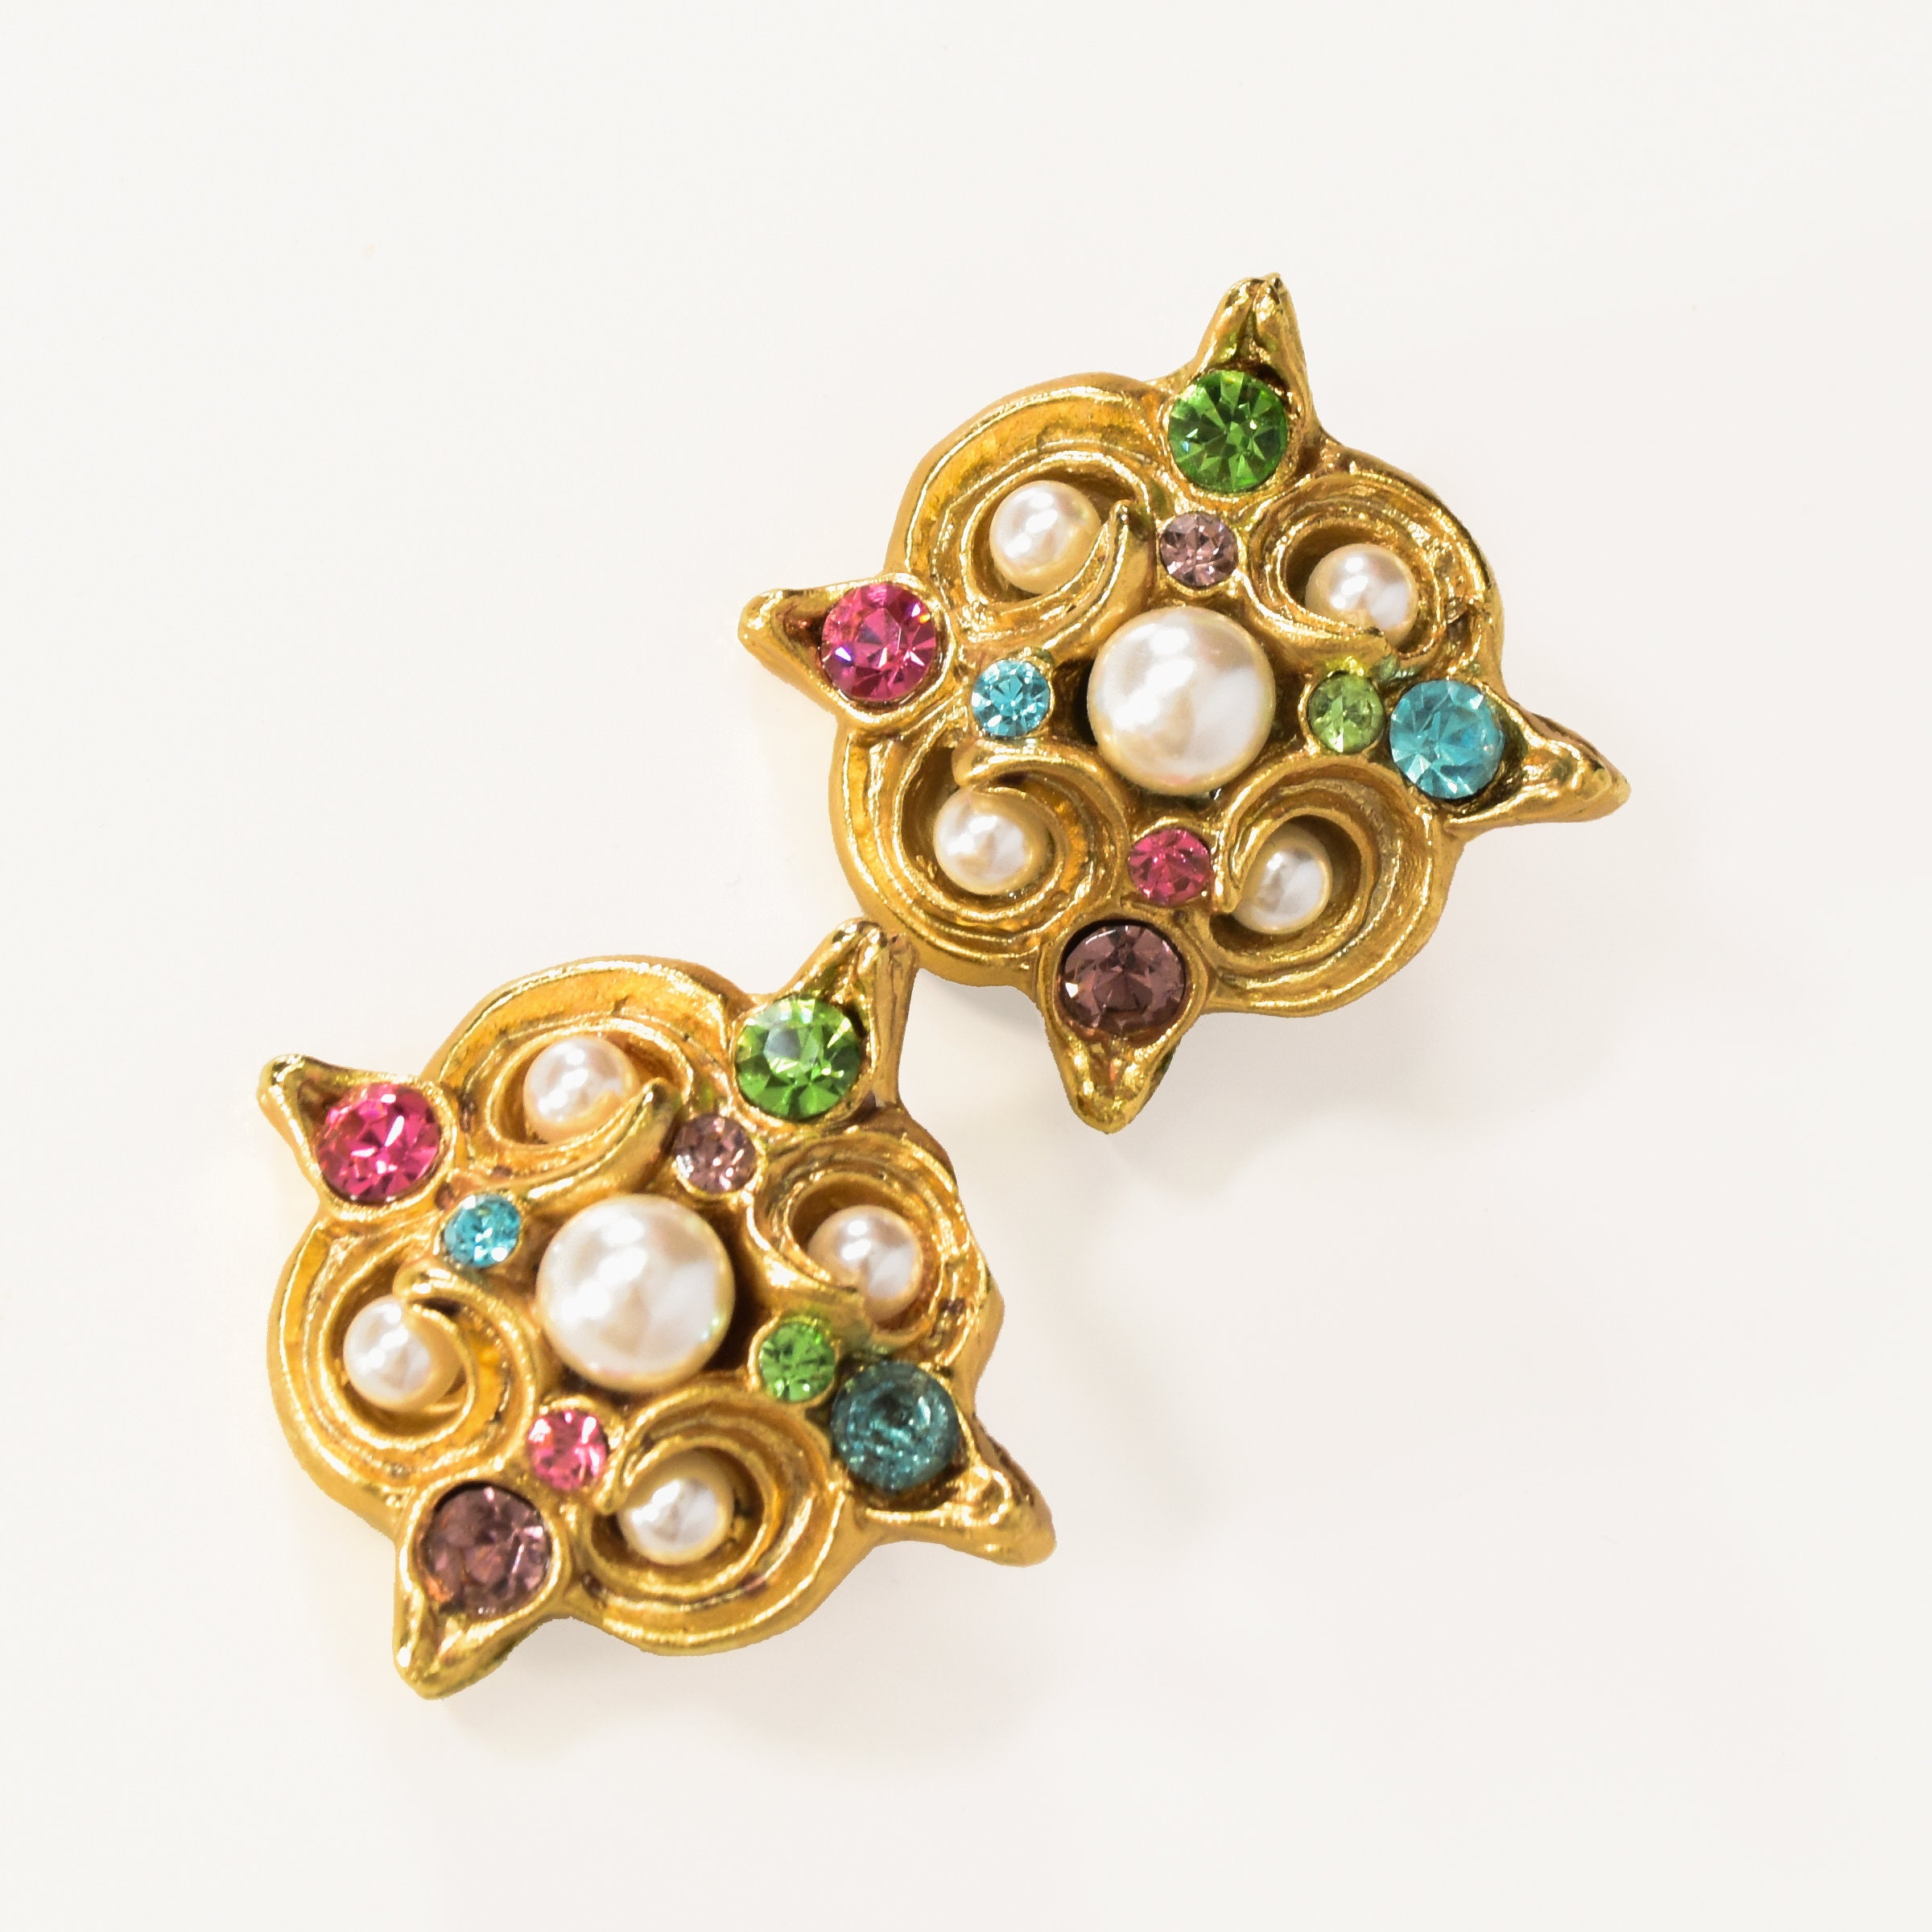 LES BERNARD earrings. vintage from the 80s. Earrings gold tone | Etsy